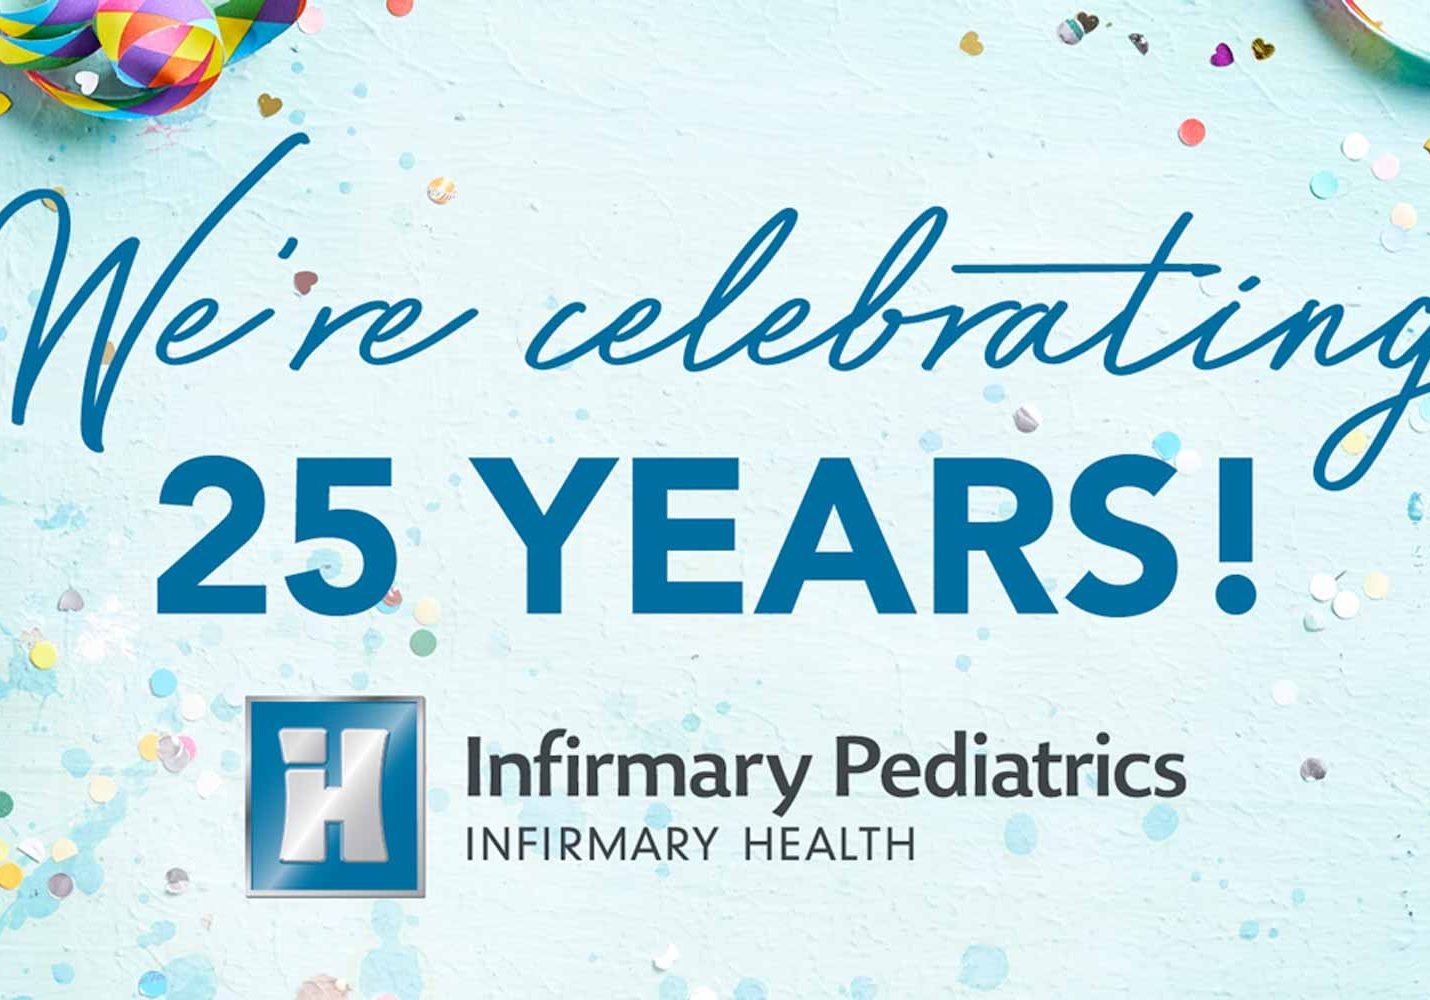 Infirmary Pediatrics Celebrates 25 Years